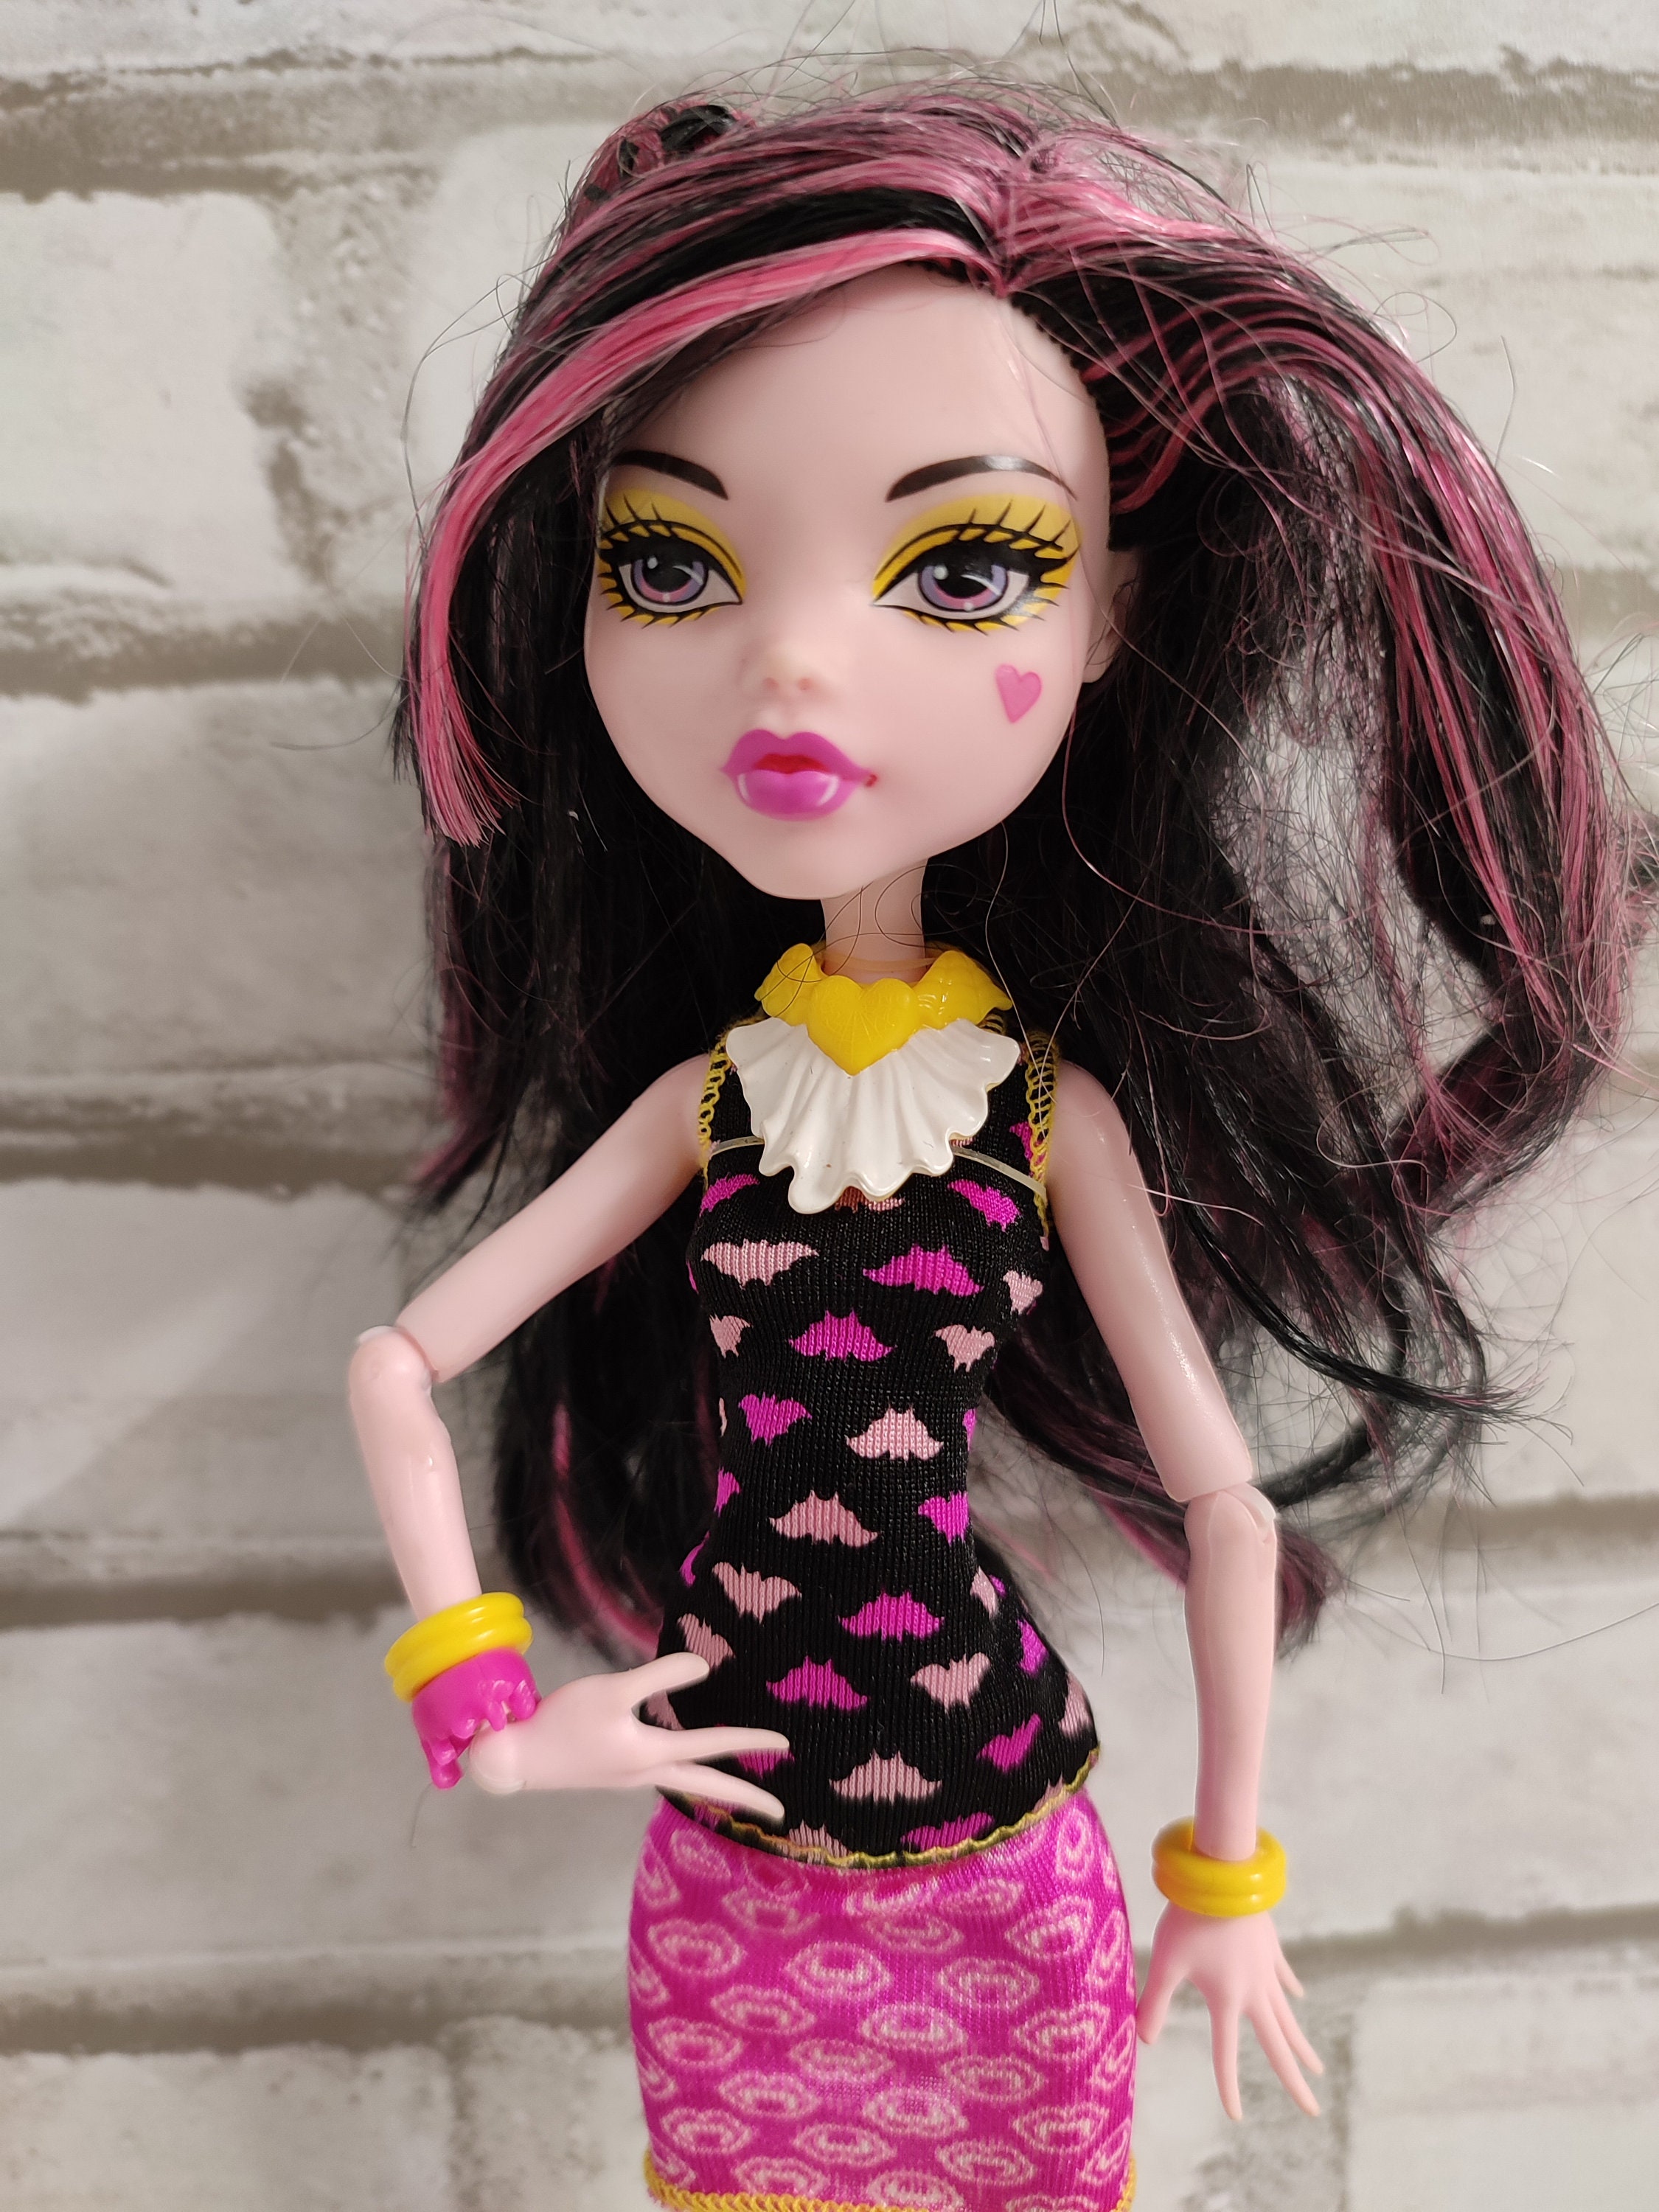 Monster High Creepateria Draculaura Doll